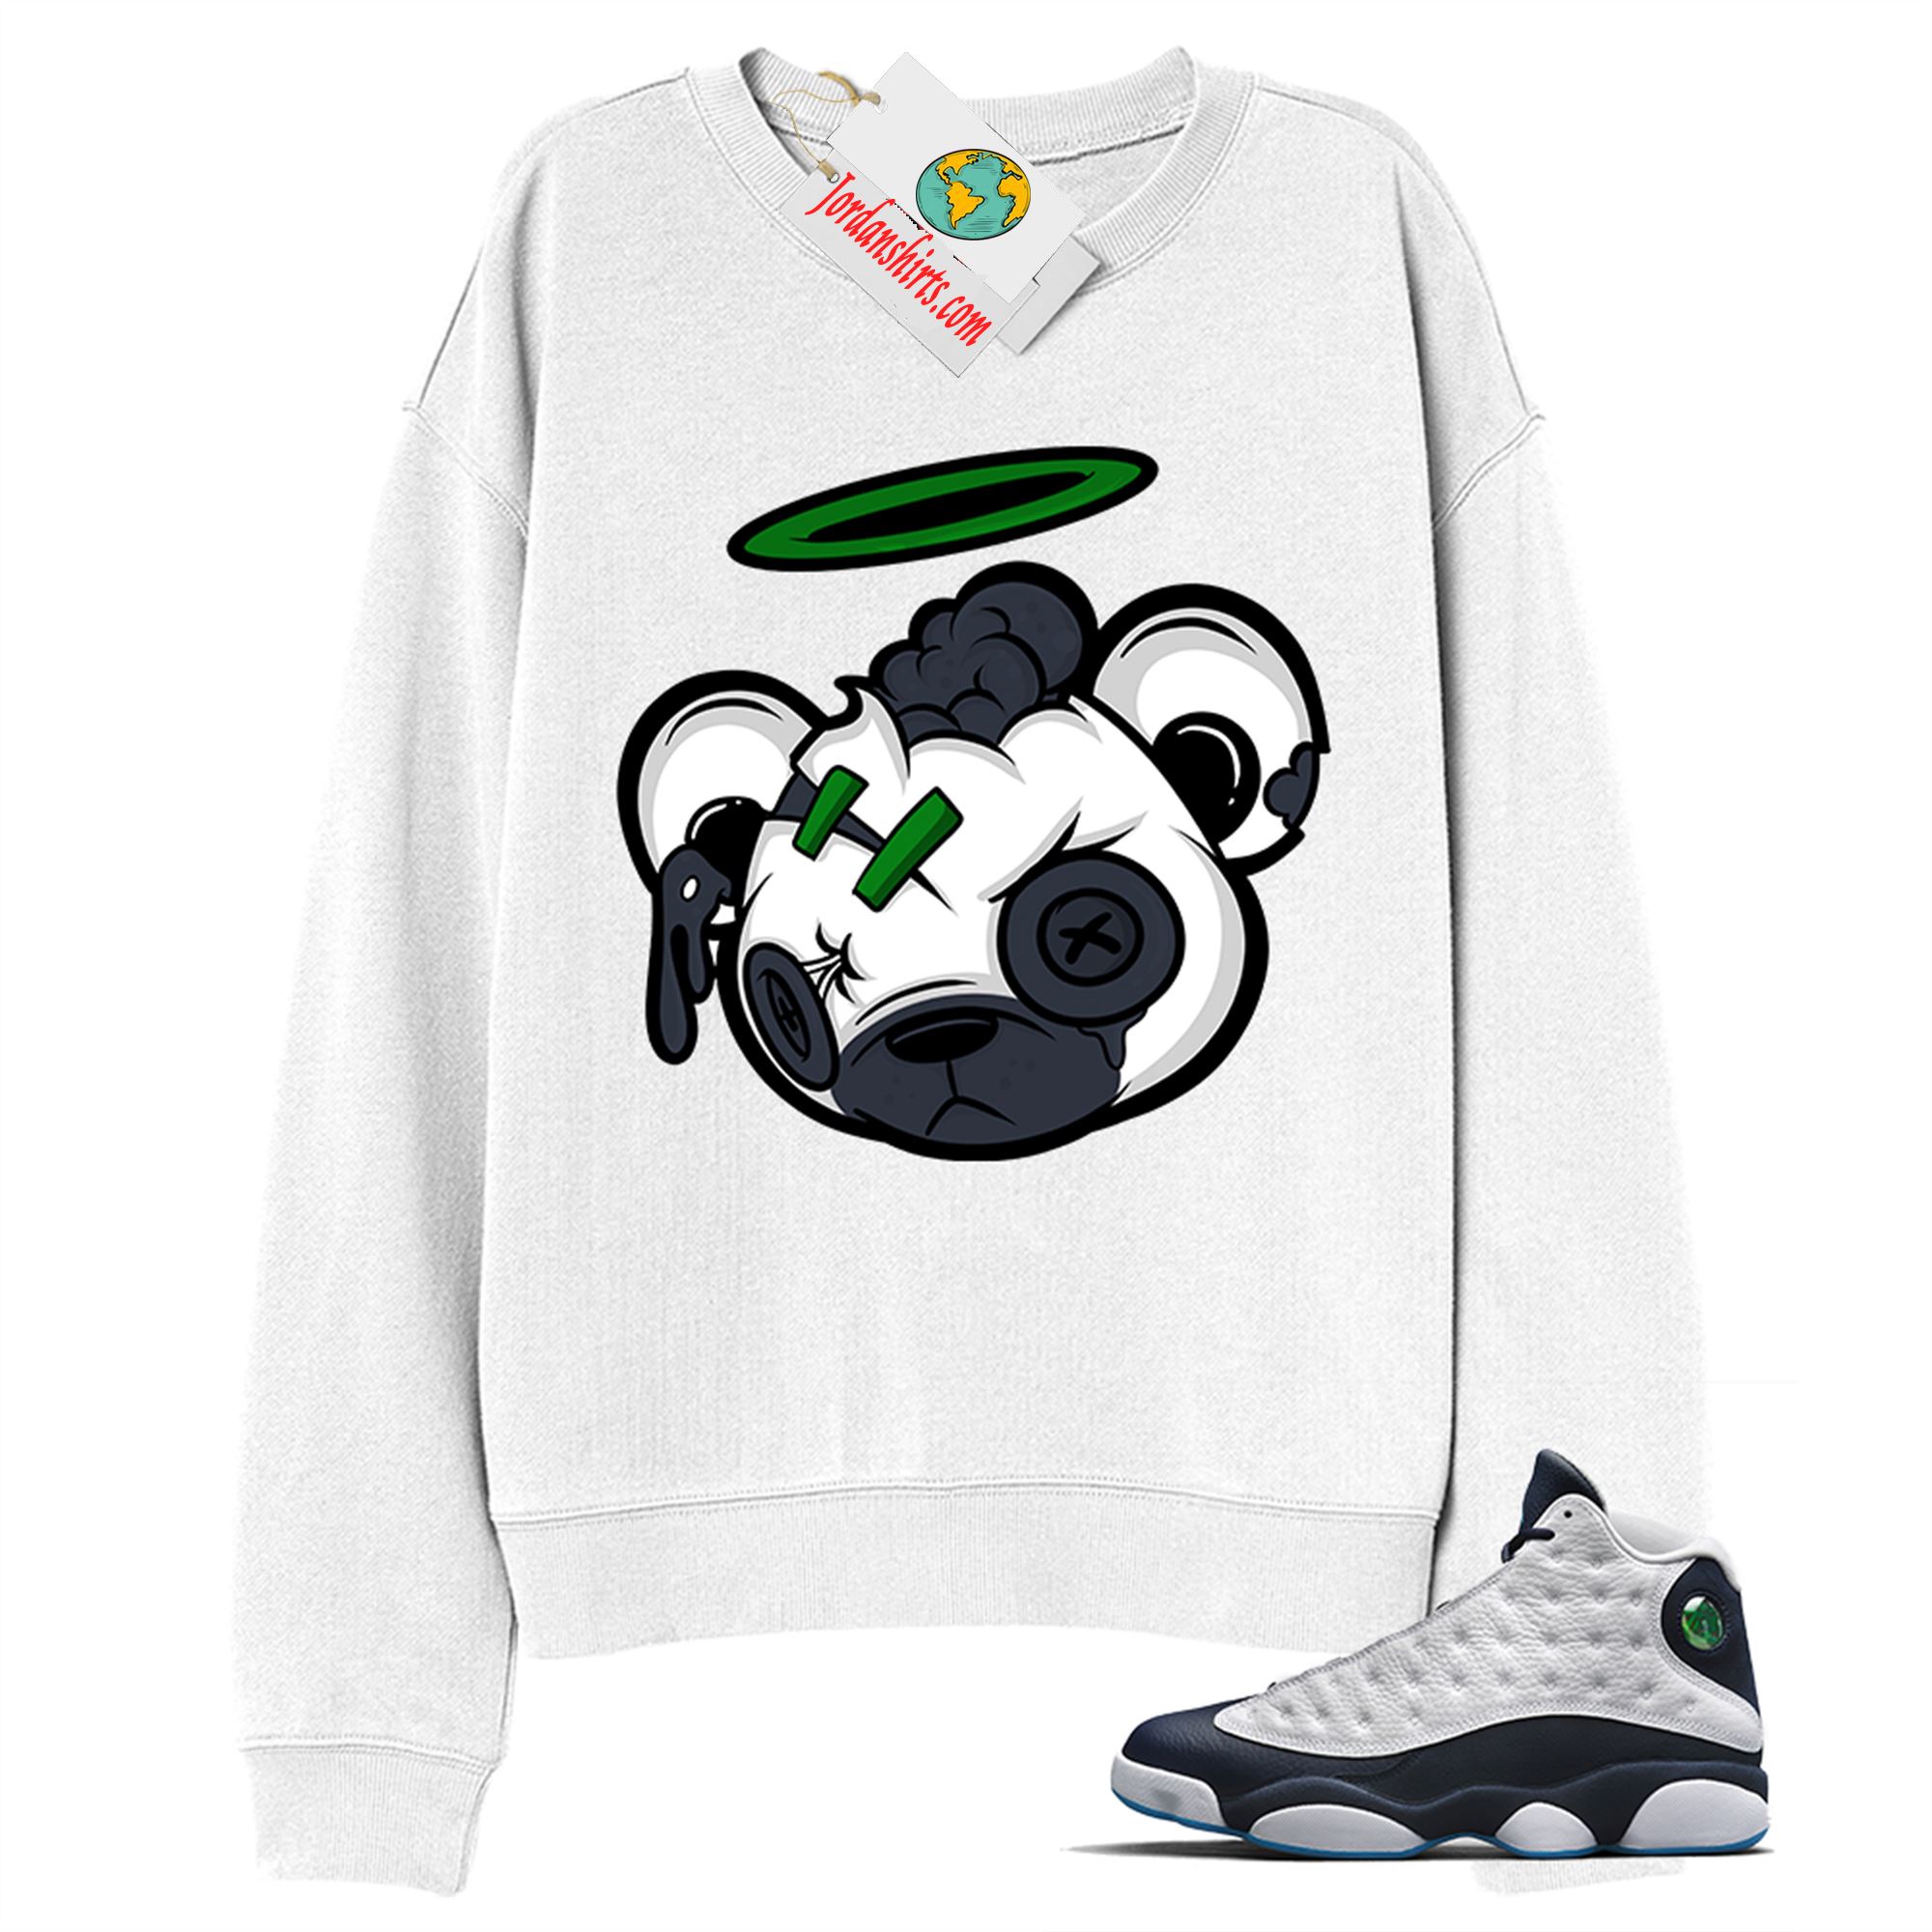 Jordan 13 Sweatshirt, Halo Teddy White Sweatshirt Air Jordan 13 Obsidian 13s Full Size Up To 5xl